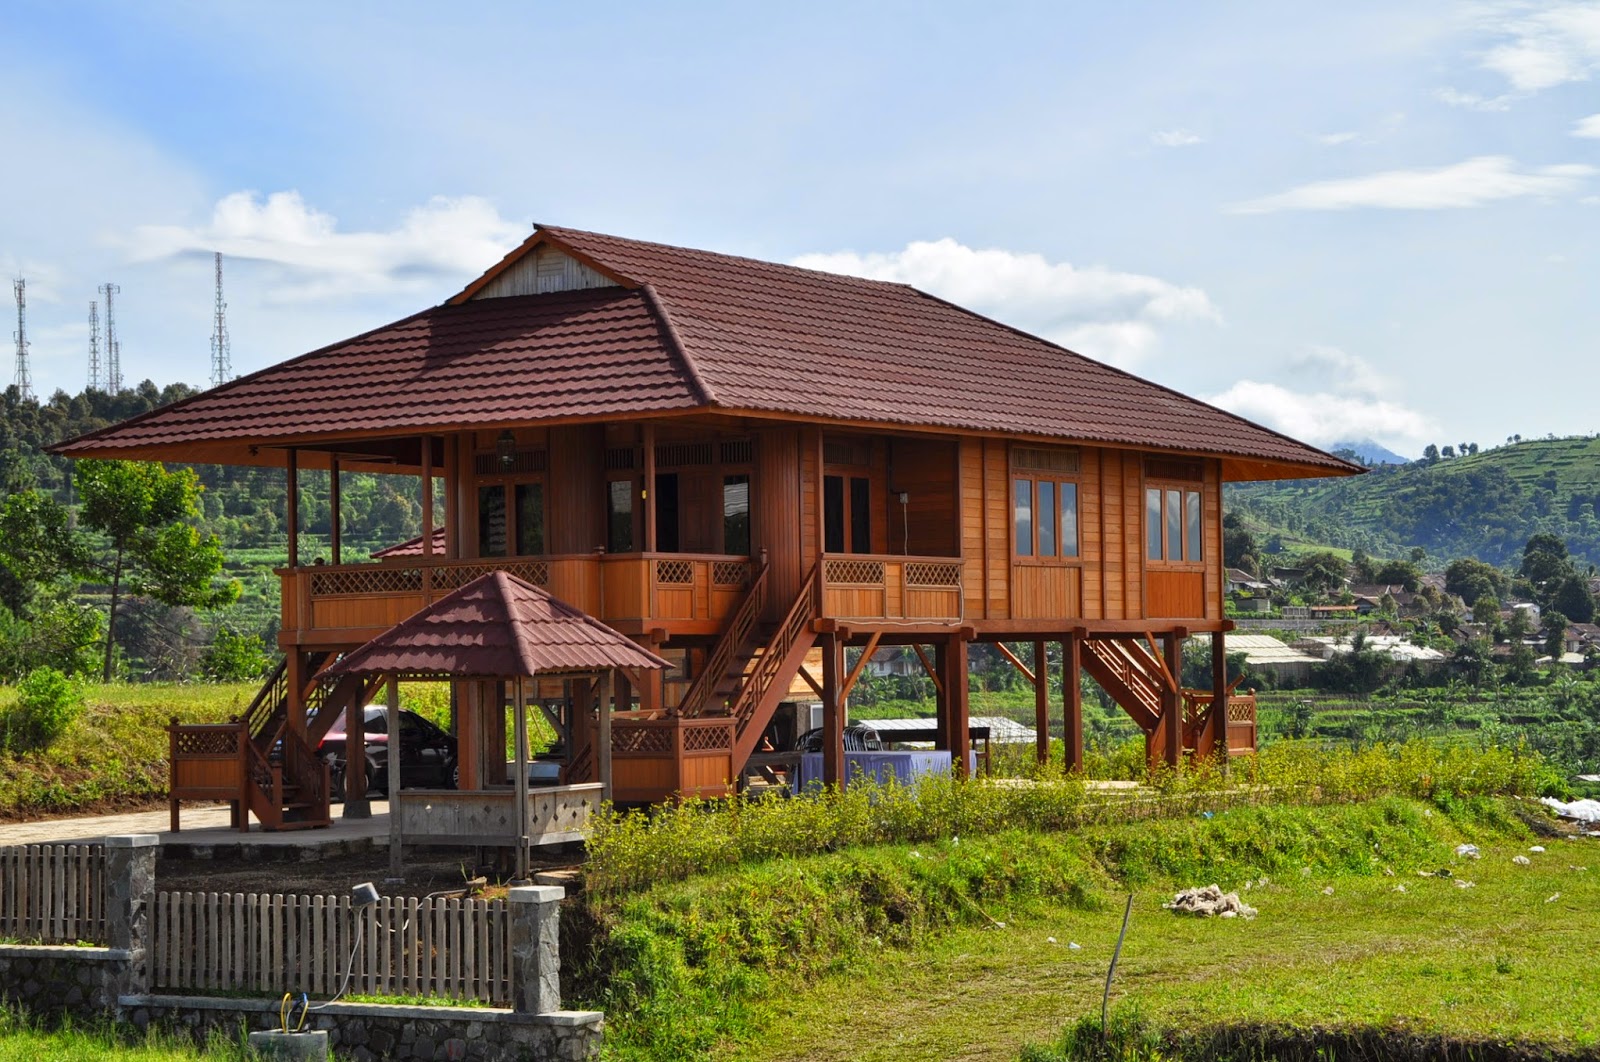  Villa  Kayu  di Kampung Gajah Bandung